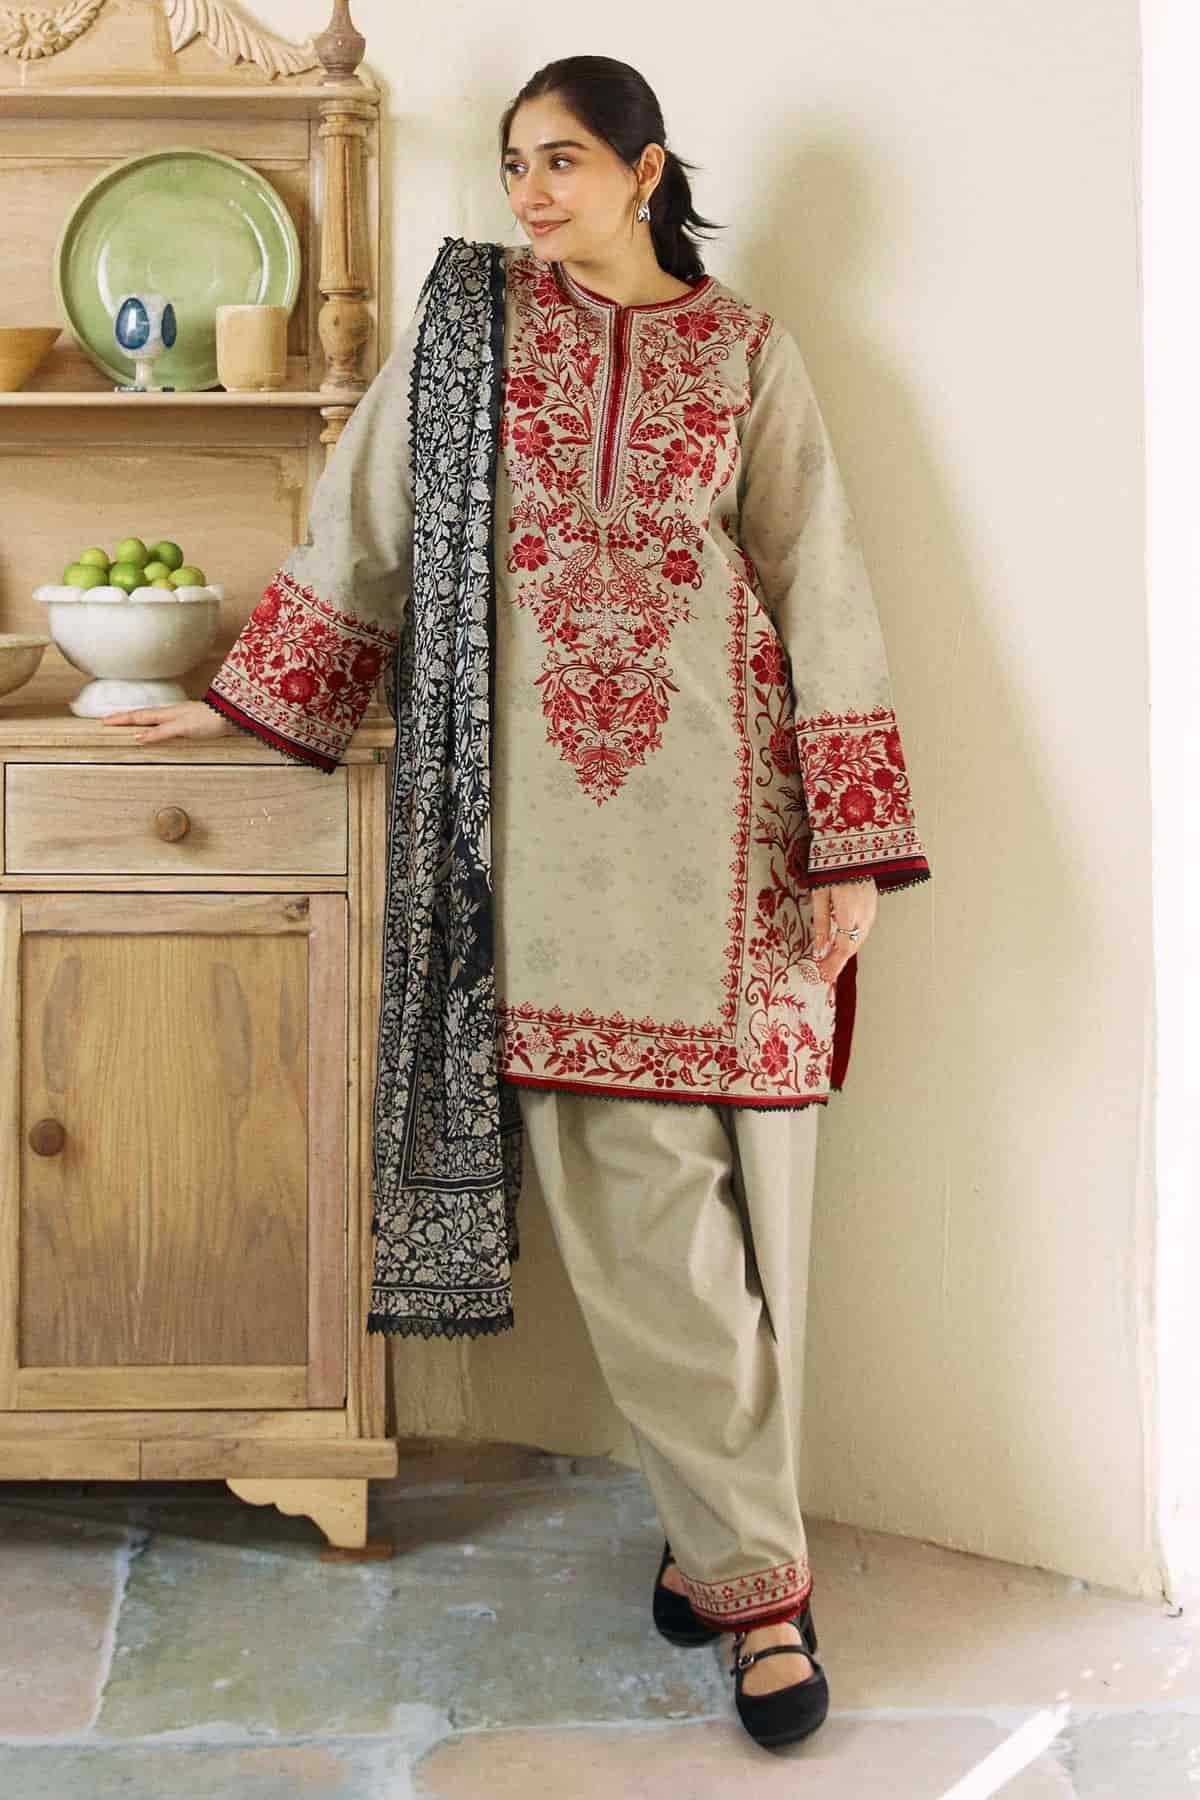 Khaadi women new dress design empires collection pakistan girls fashion clothing suit 3piece top brand